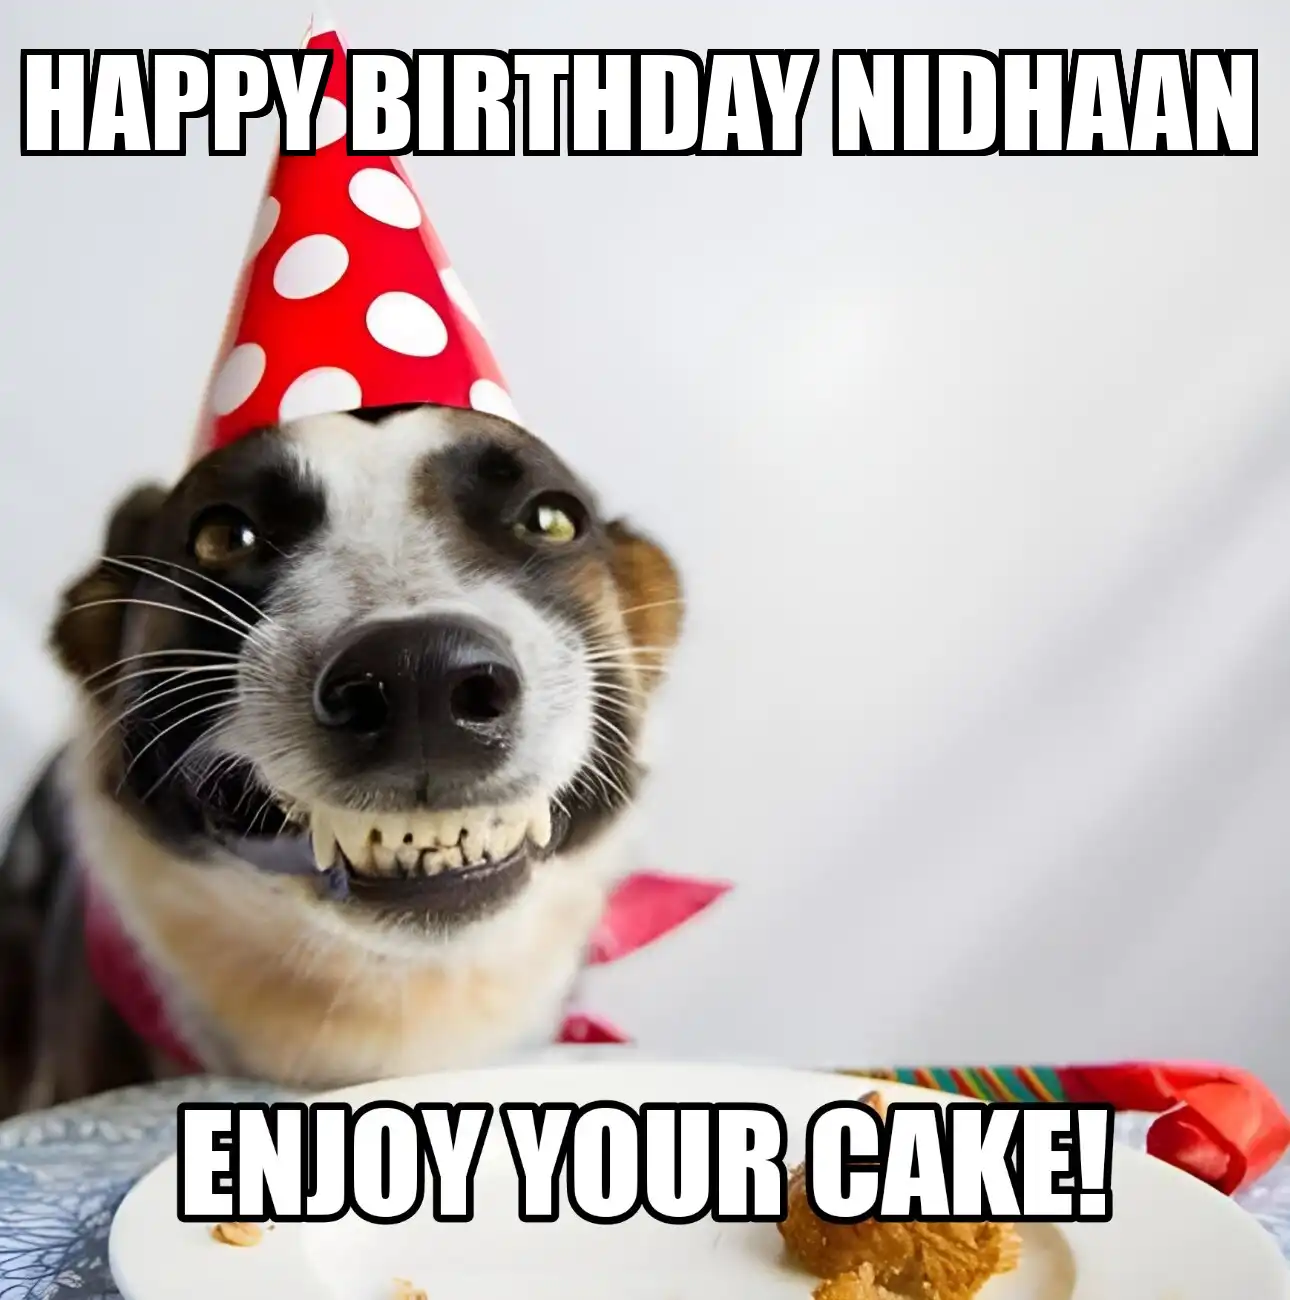 Happy Birthday Nidhaan Enjoy Your Cake Dog Meme